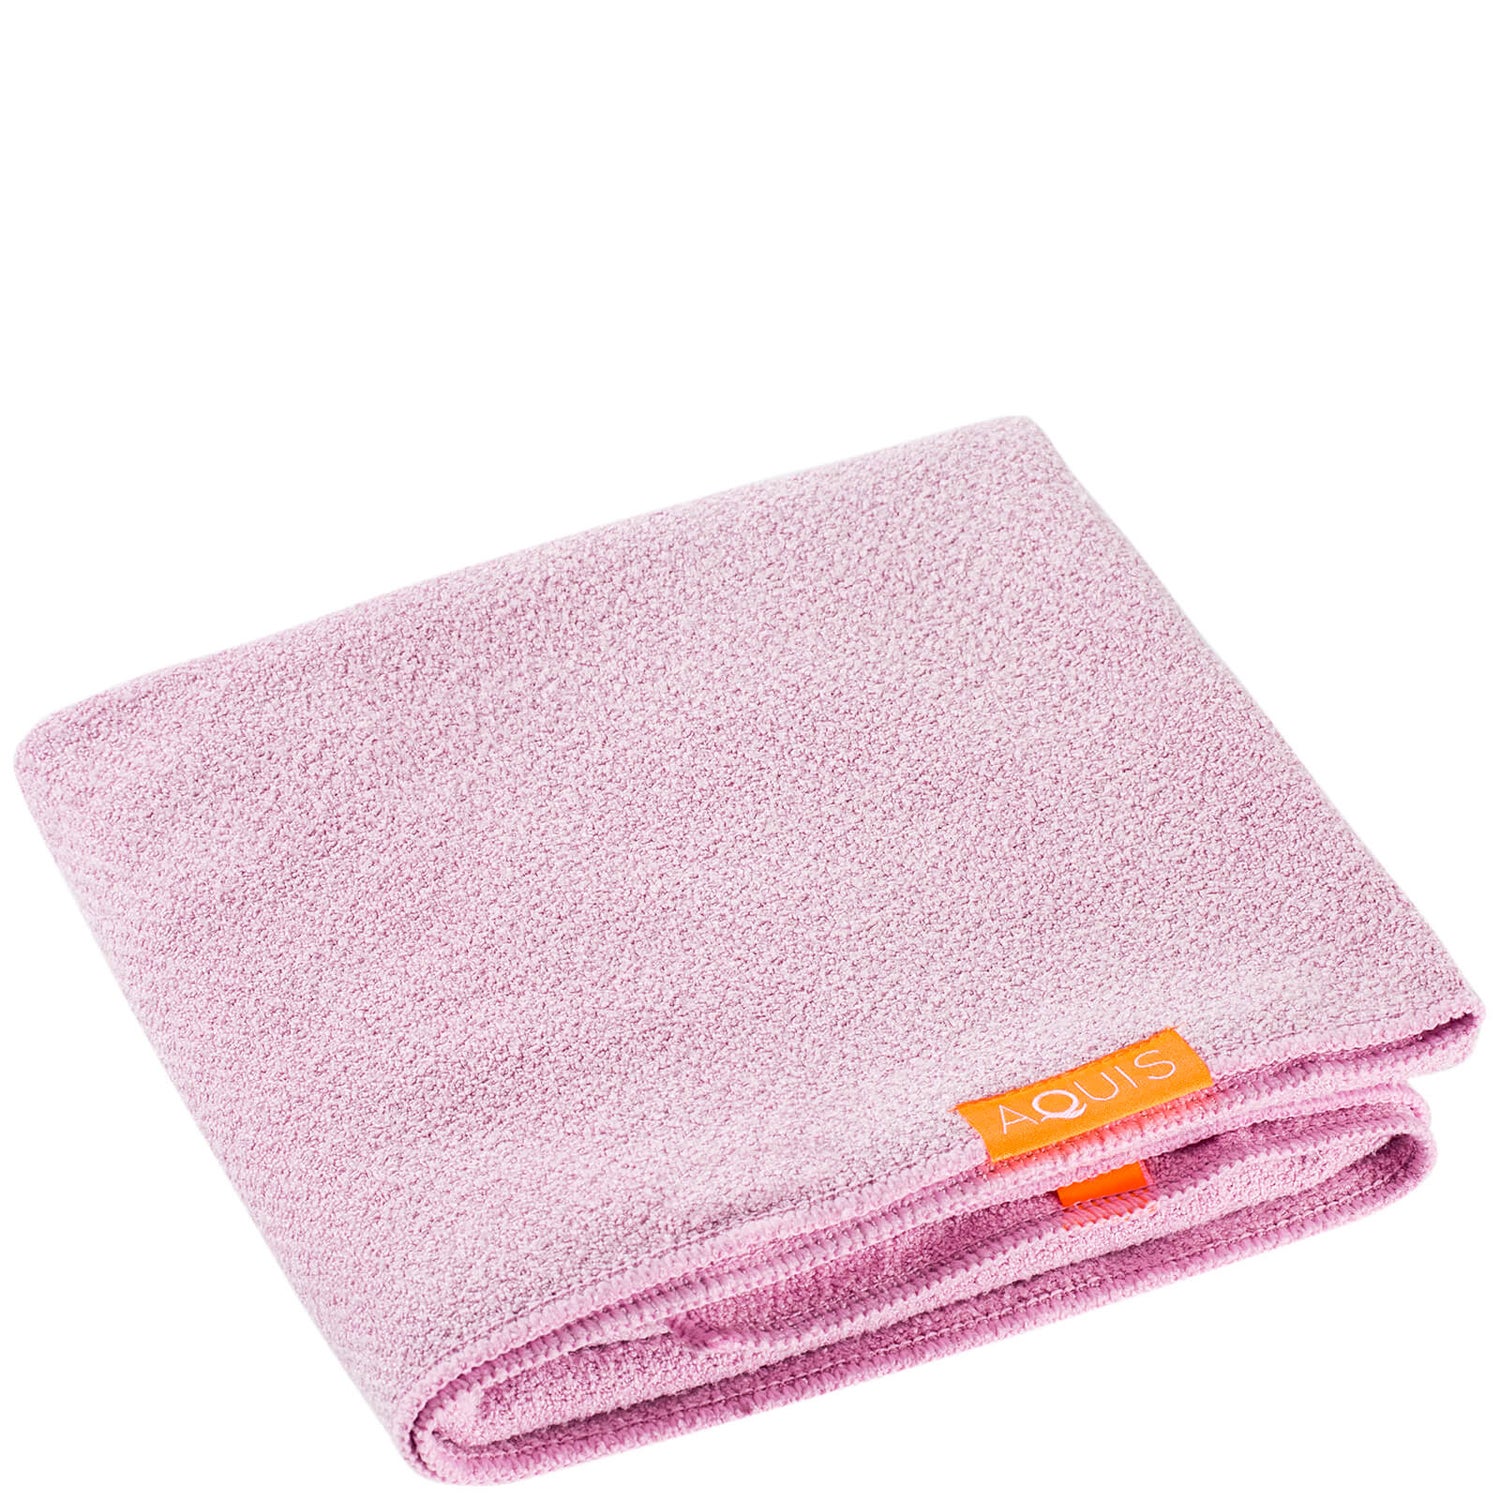 Aquis Hair Towel Lisse Luxe Desert Rose